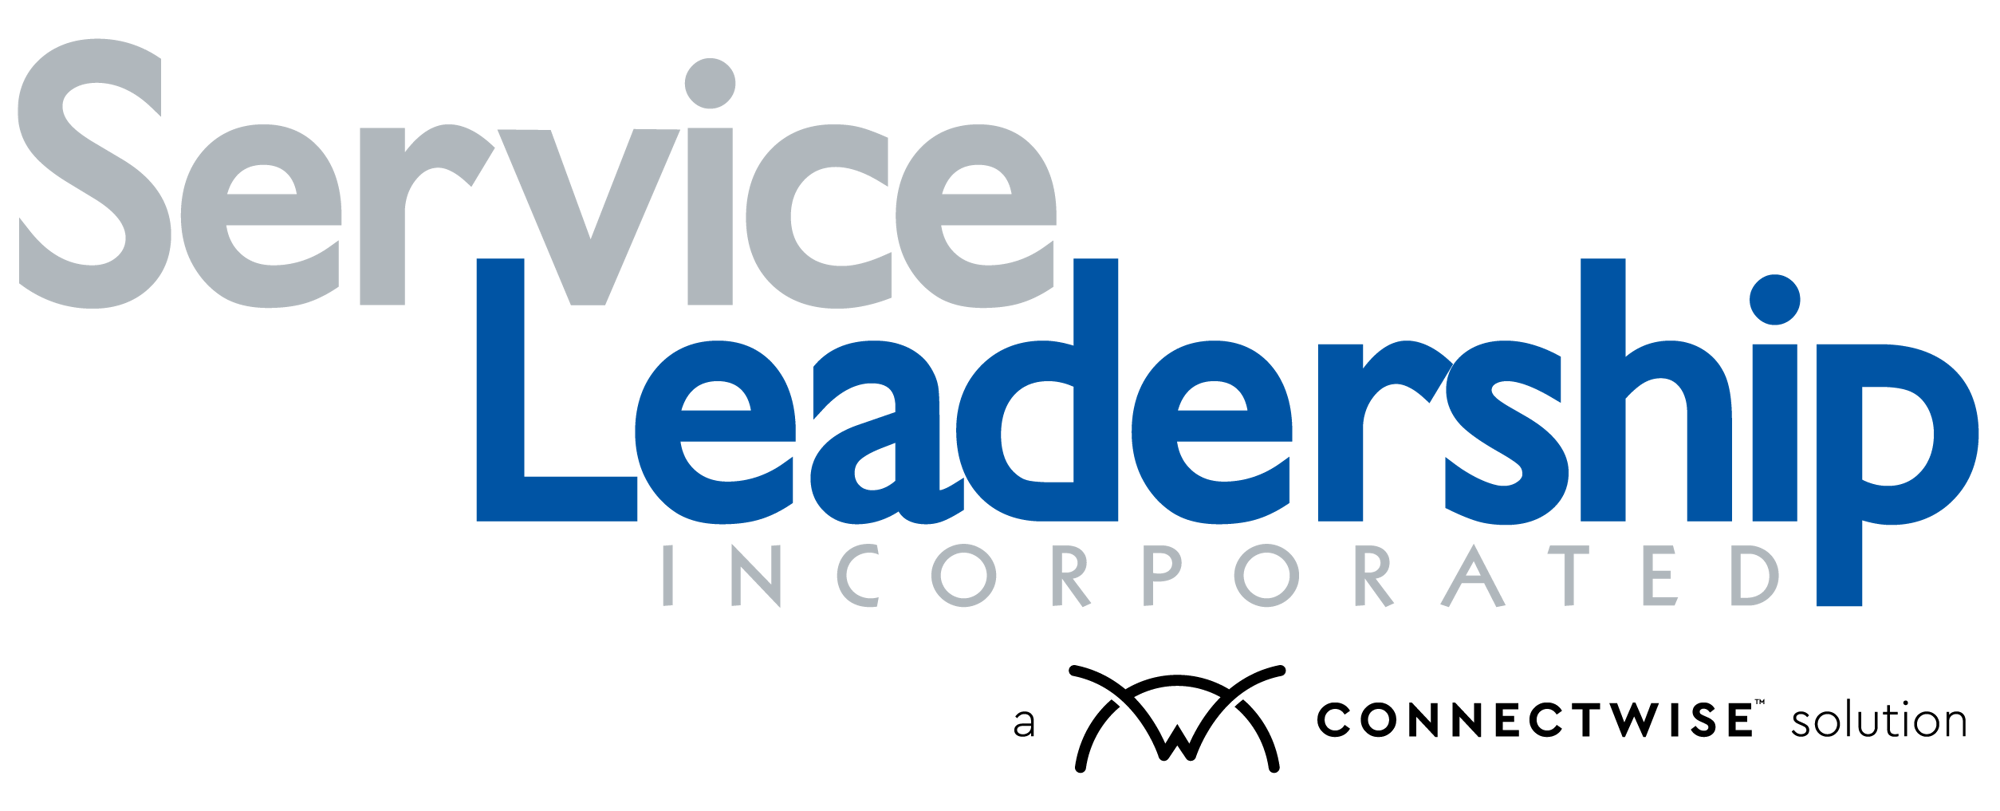 service-leadership-logo-2